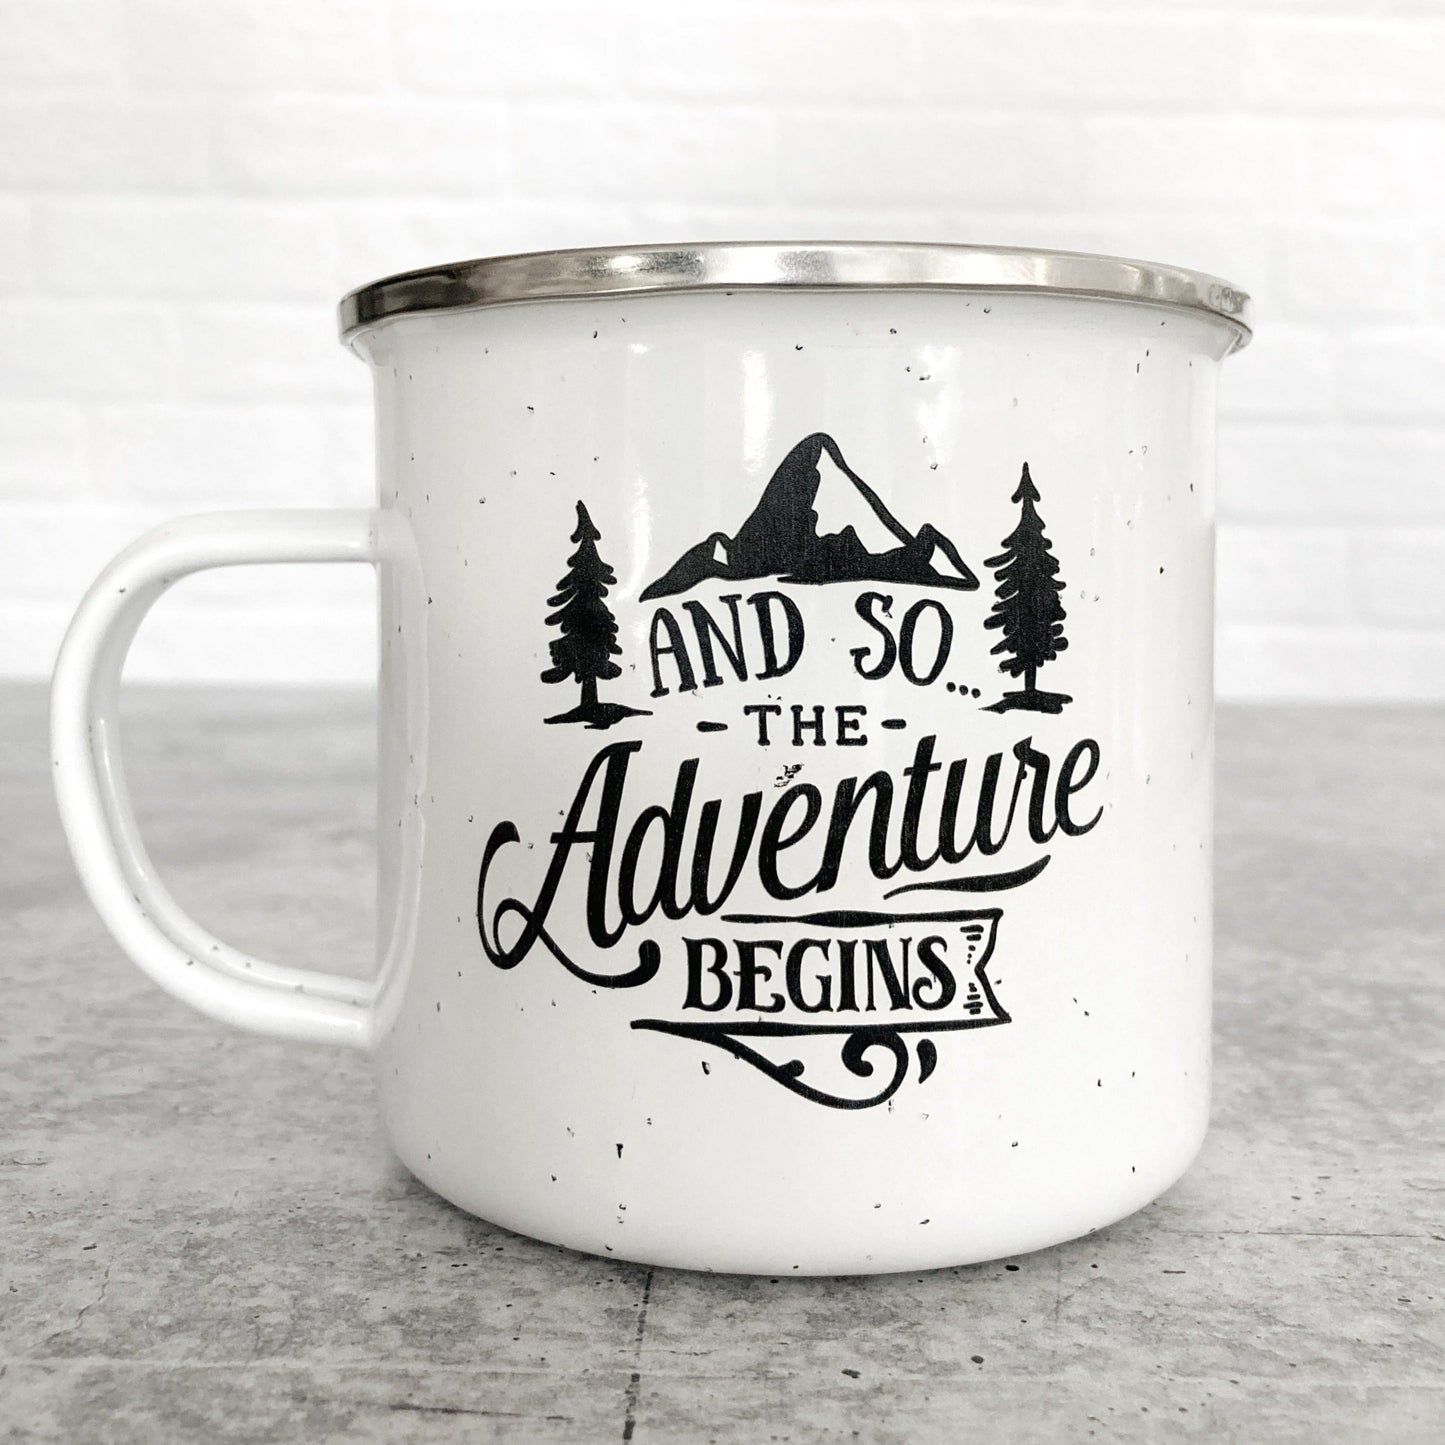 And So...The Adventure Begins design on a white enamel mug